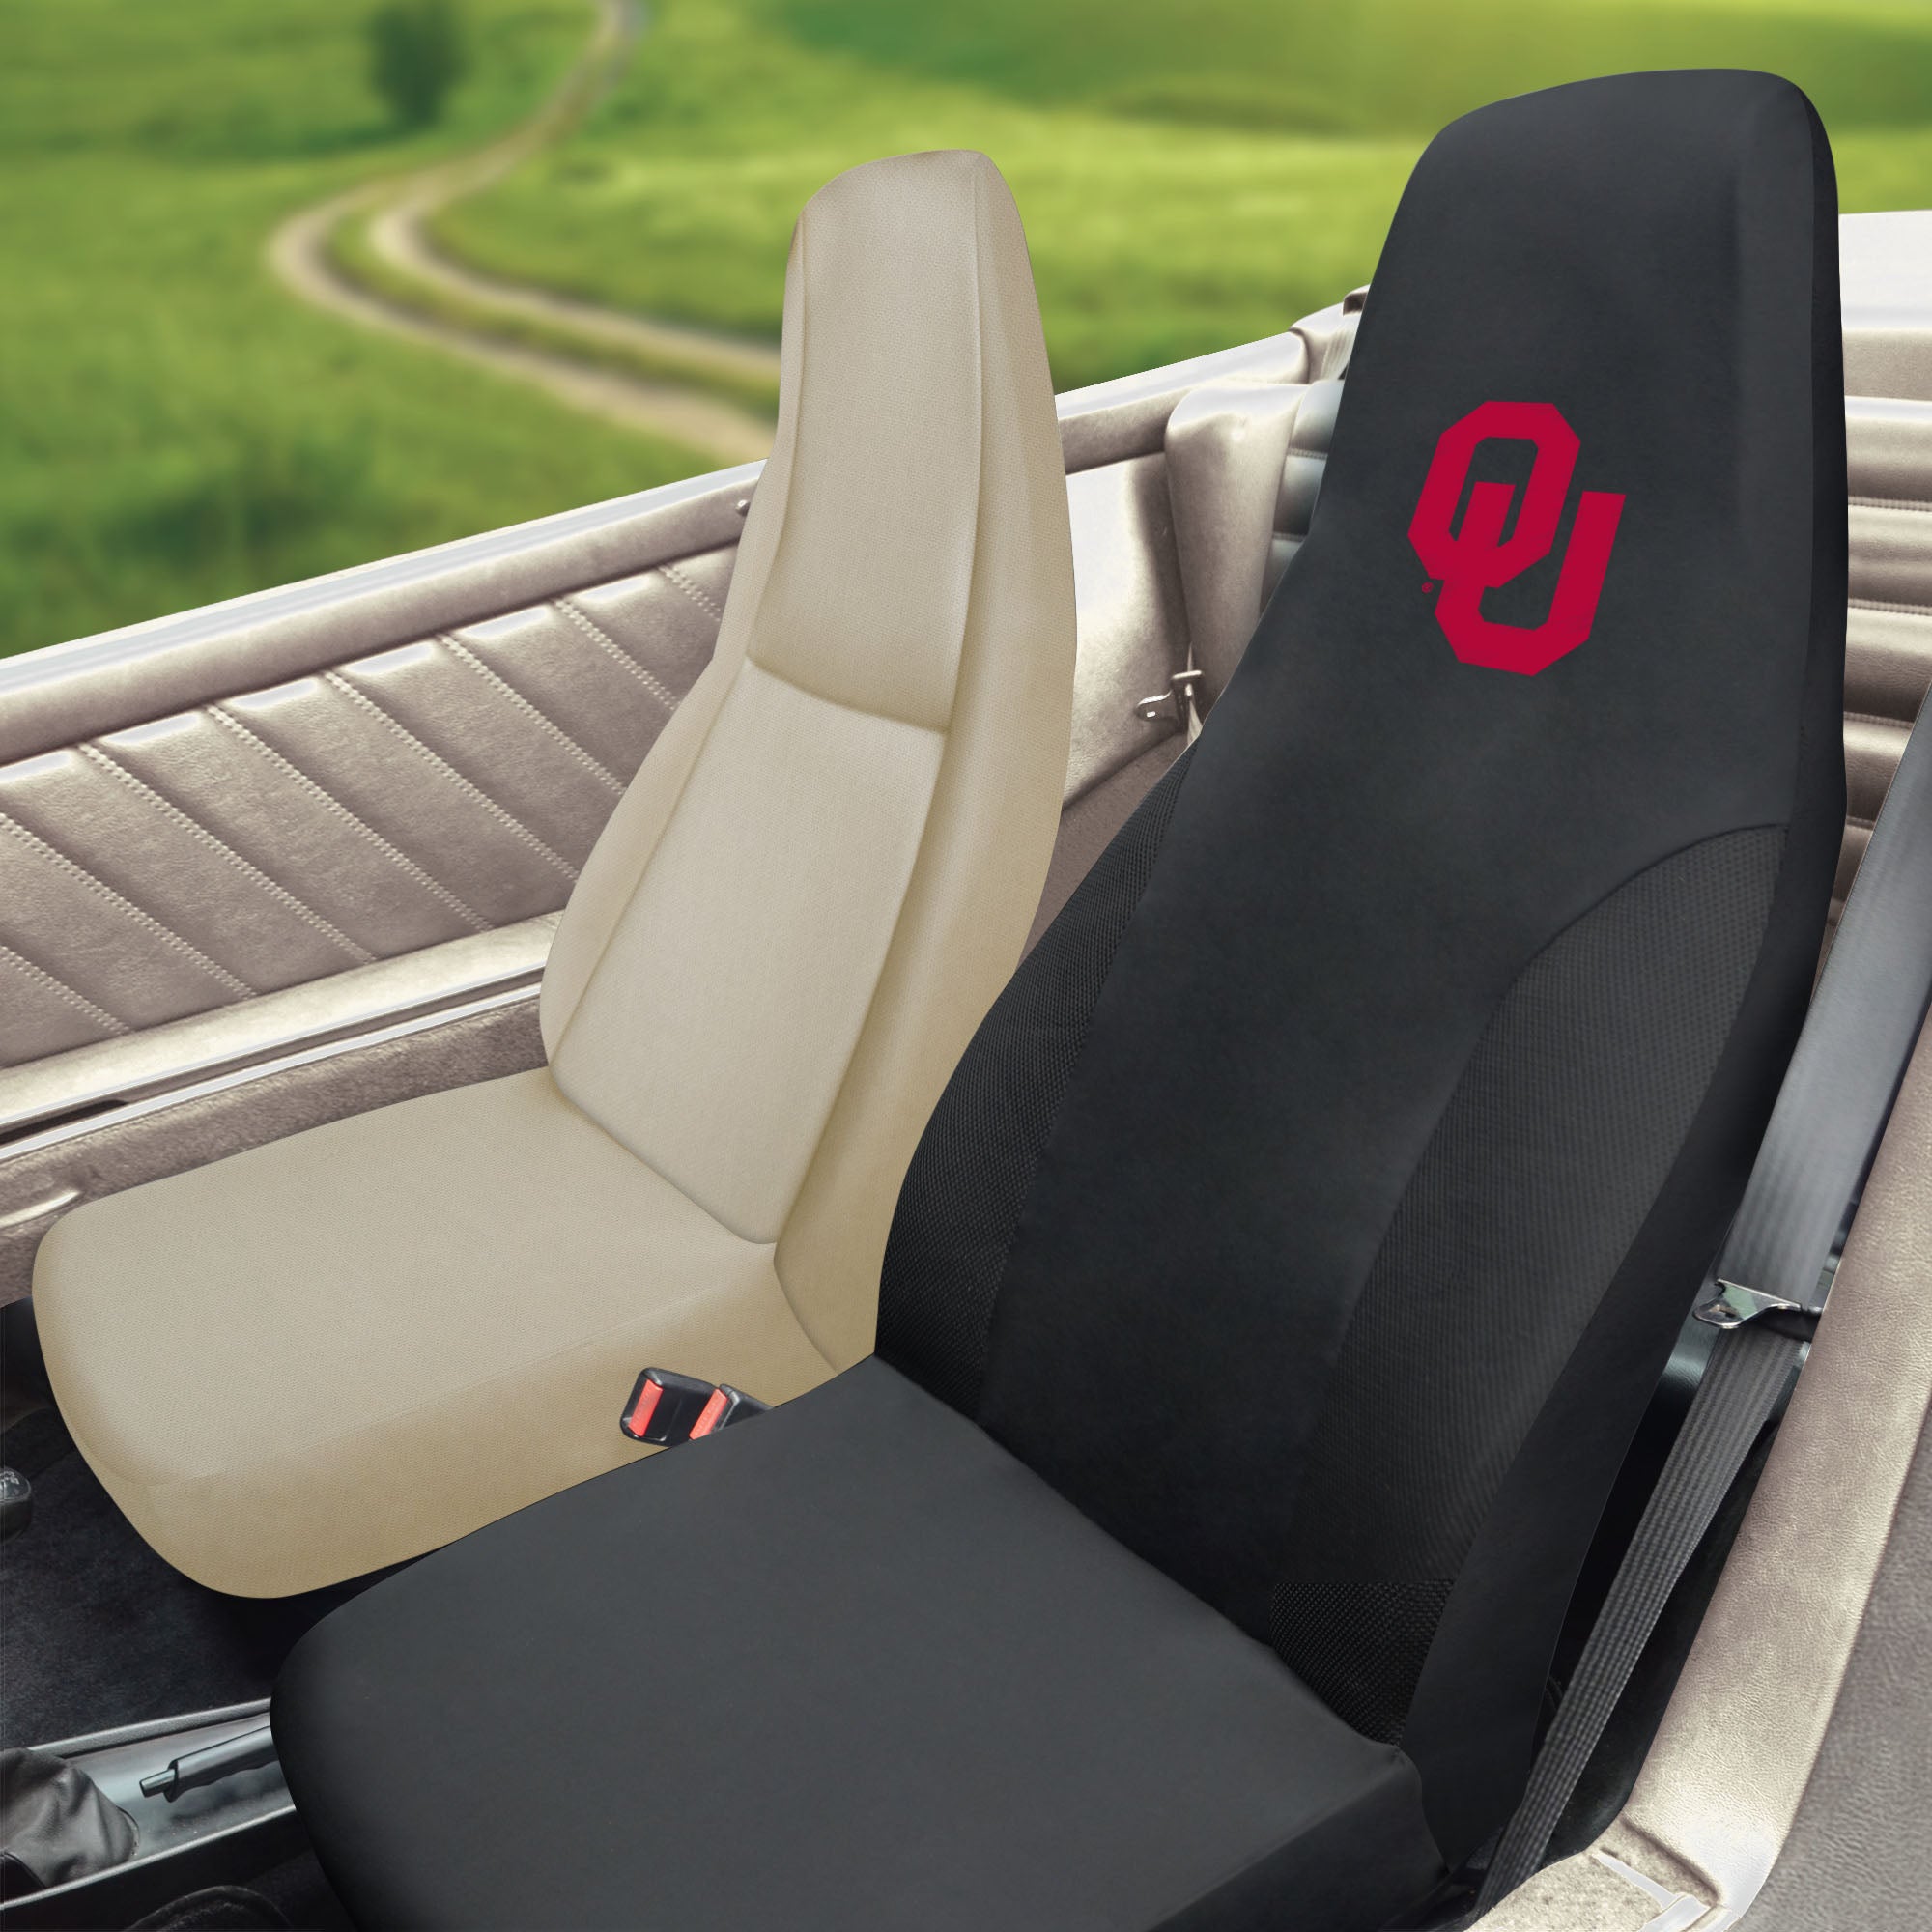 University of Oklahoma Set of 2 Car Seat Covers